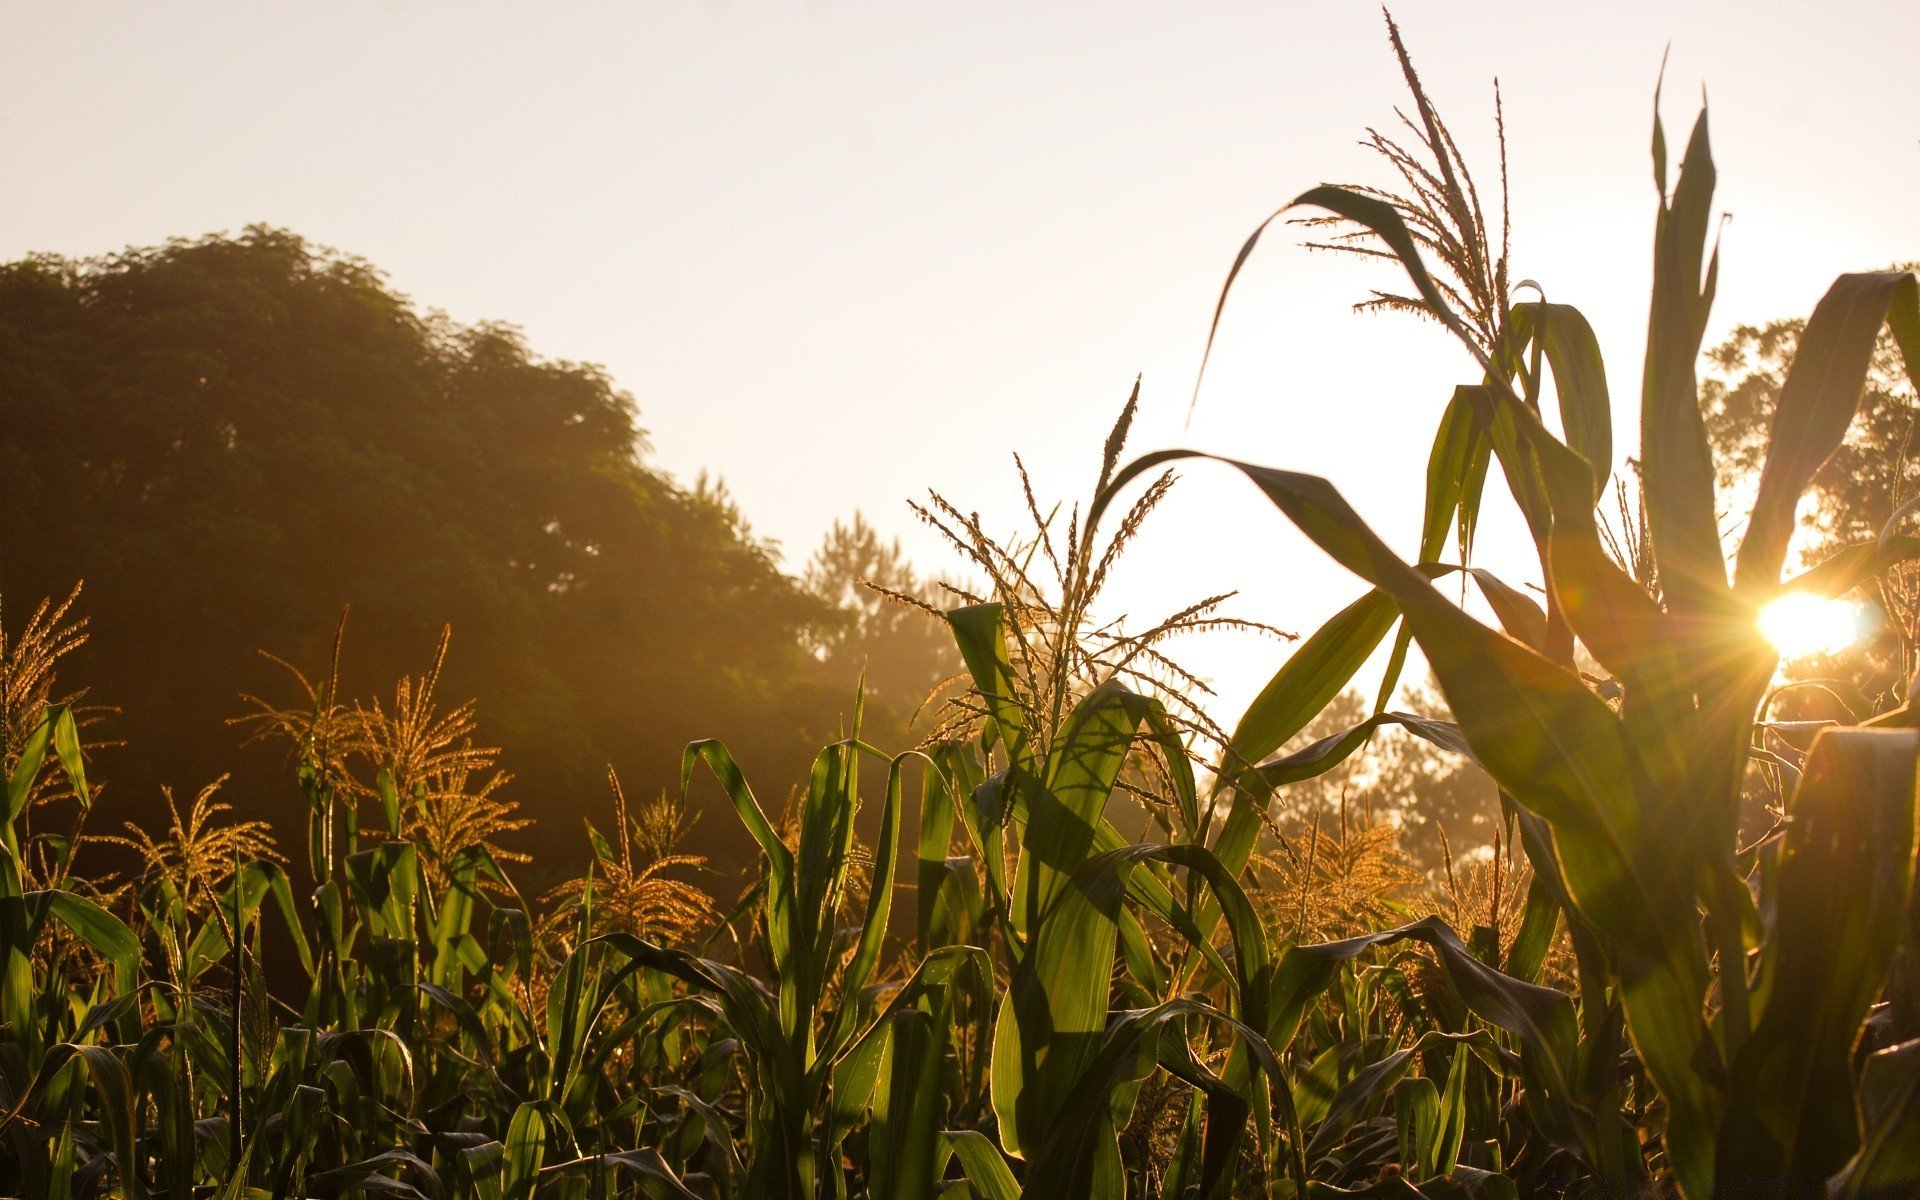 кукурузное поле фото